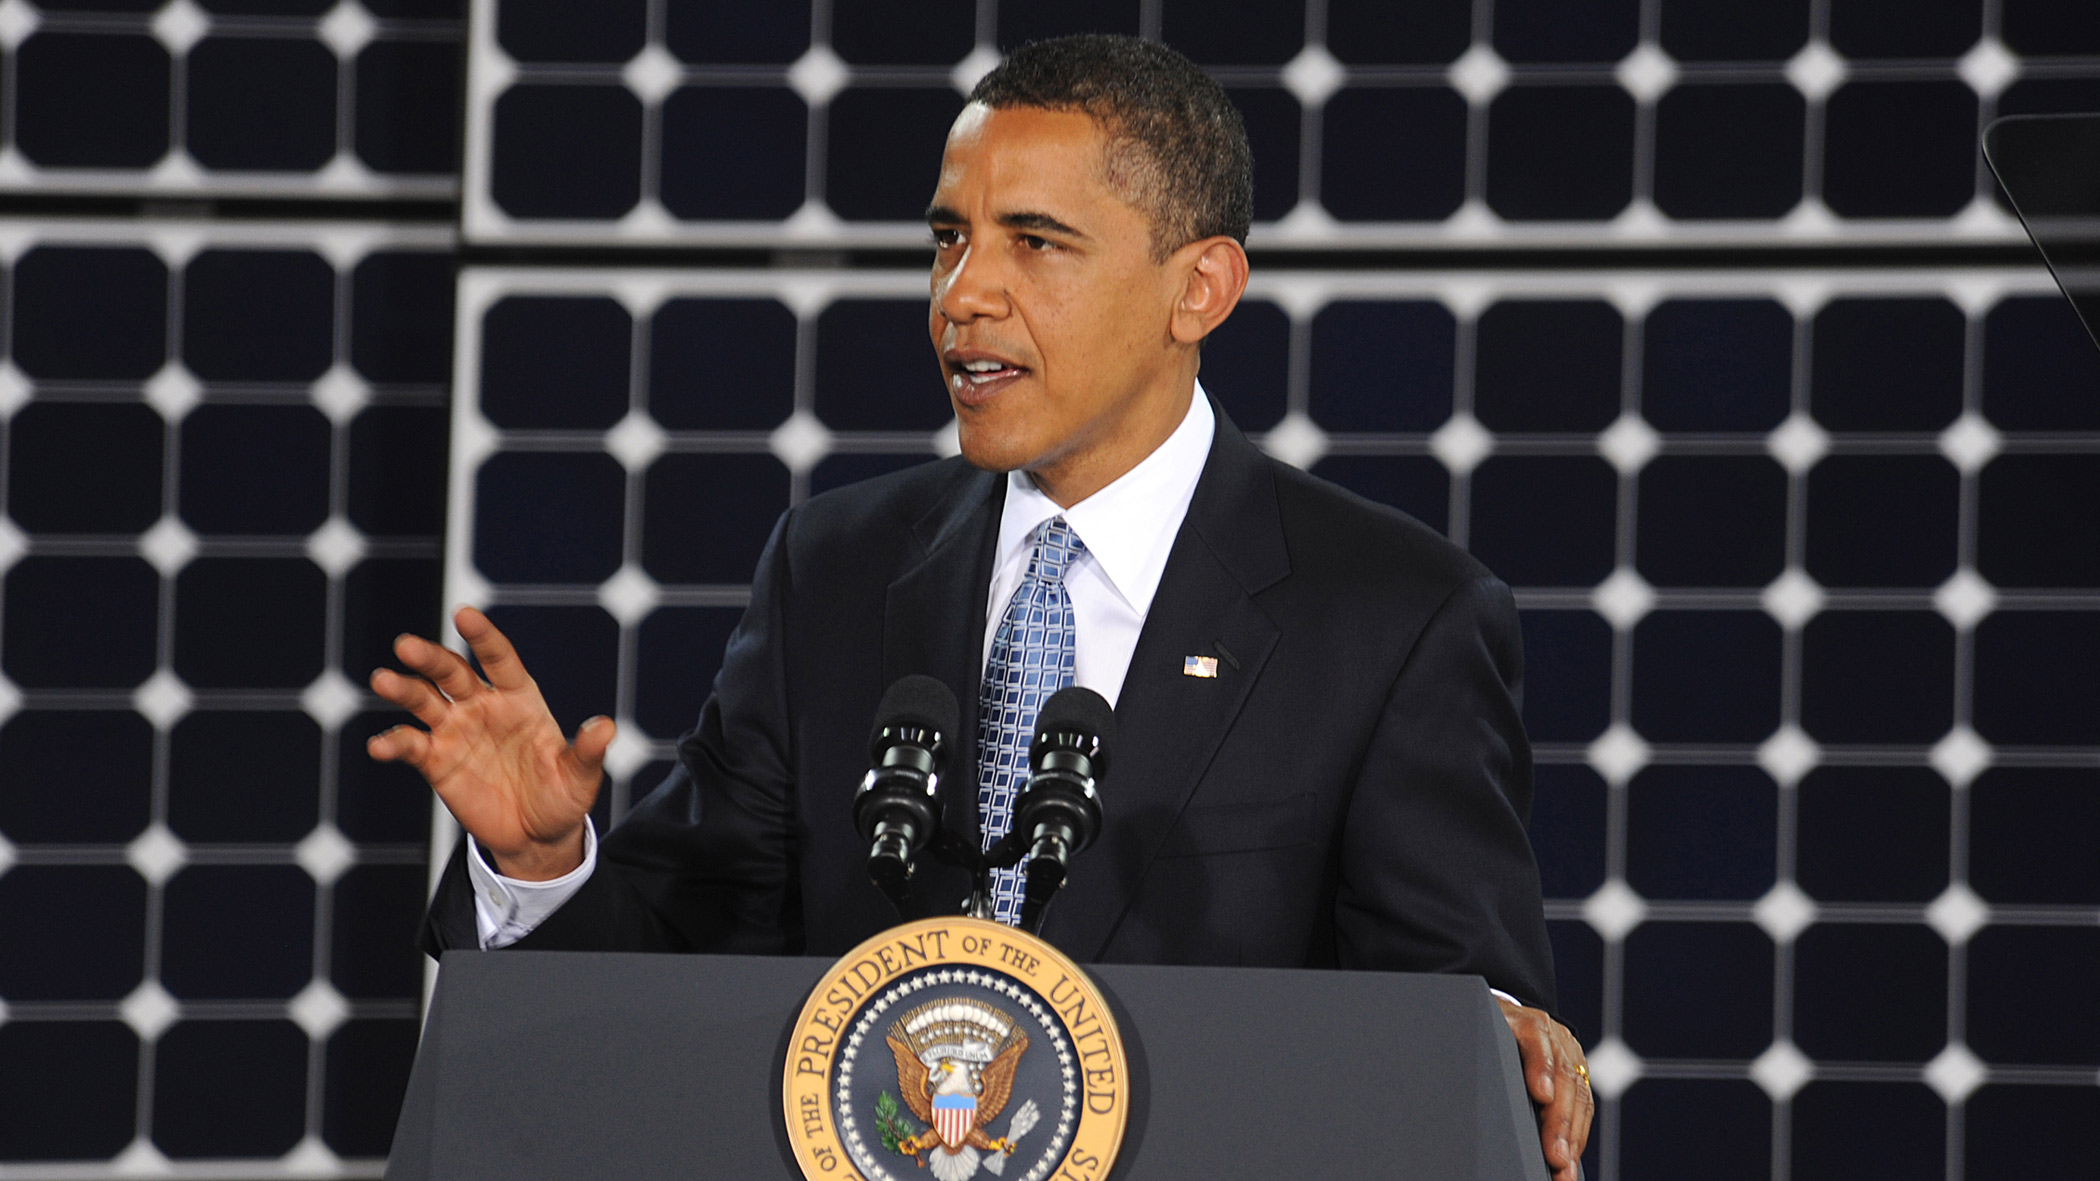 Obama and solar panels